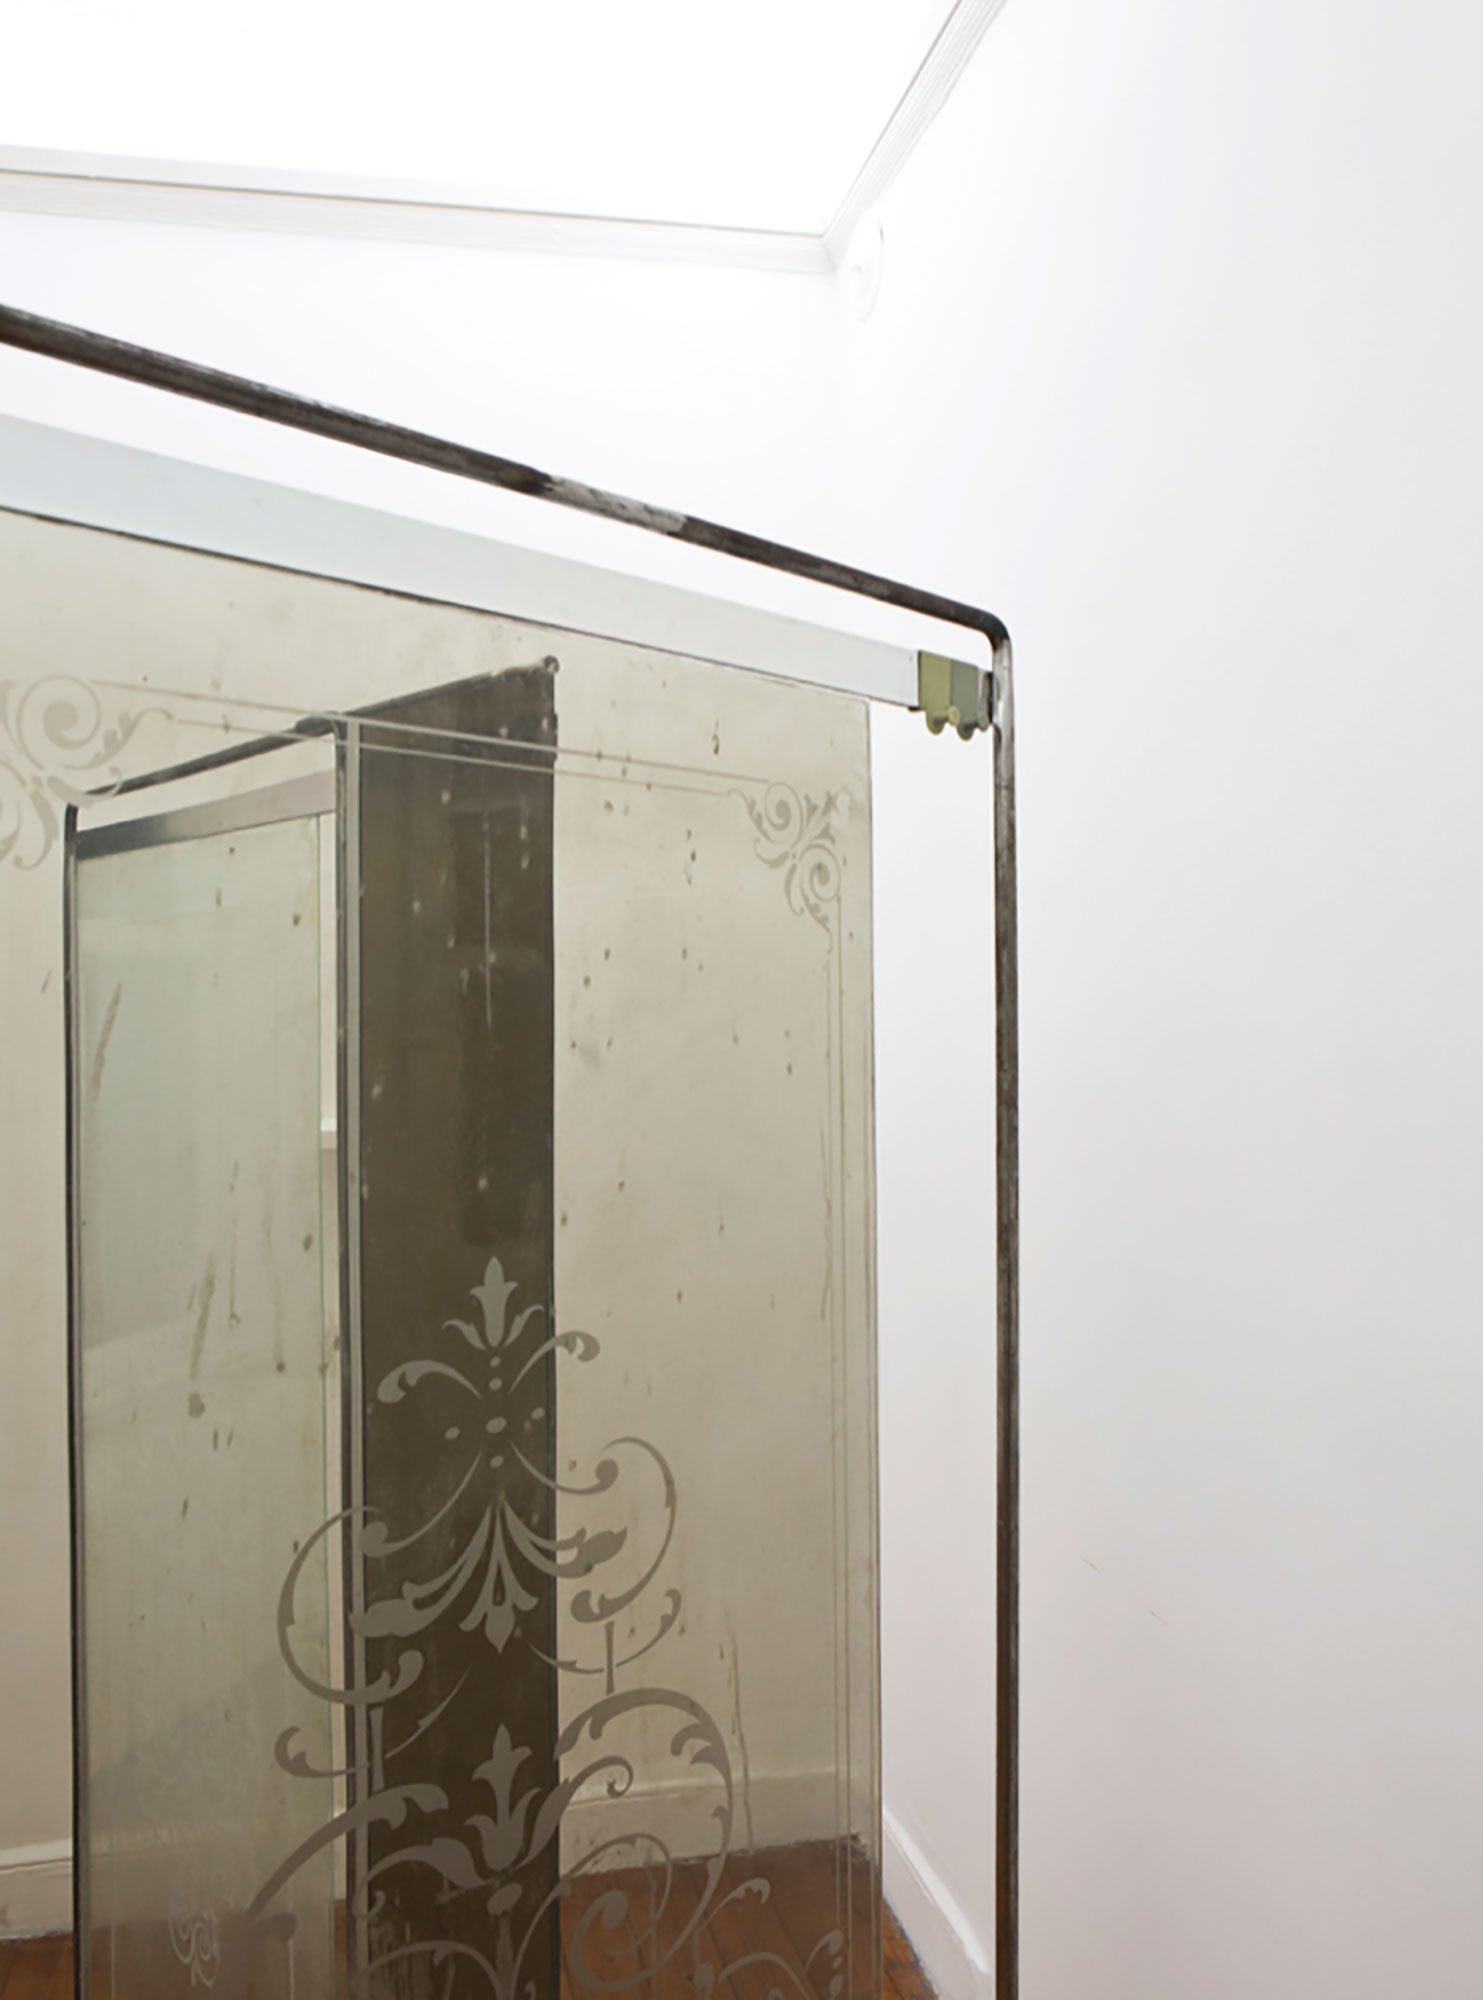 Eloise Hawser, Untitled, shower doors, steel frame, 2013